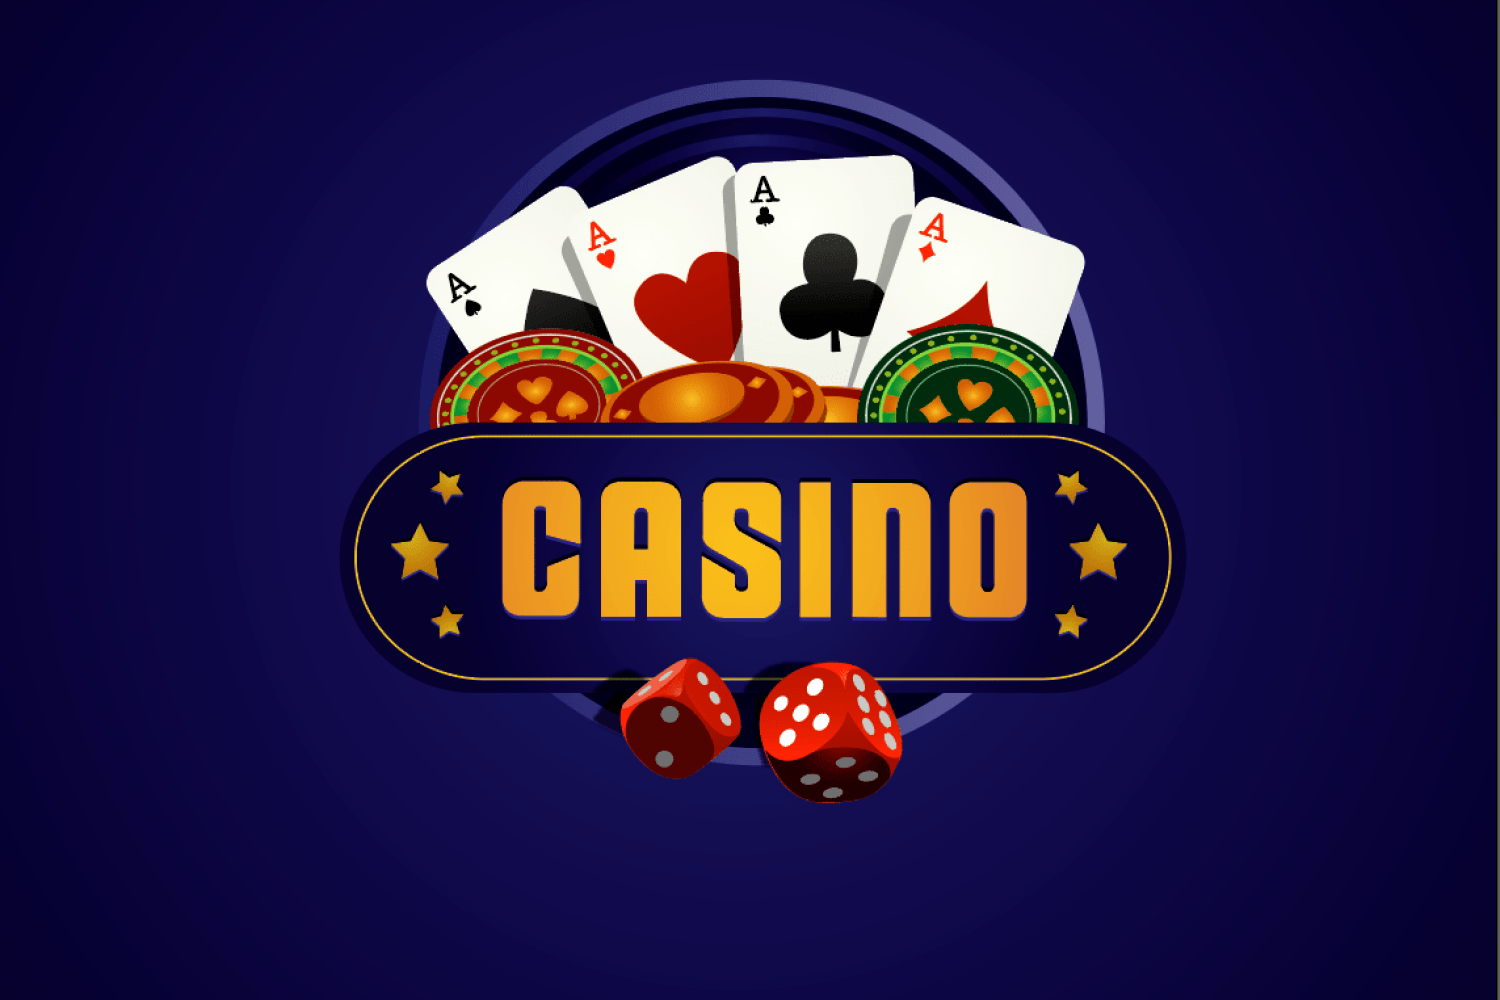 Retro casino site ru. Казино. Эмблема казино. Казино надпись. Вывеска казино.